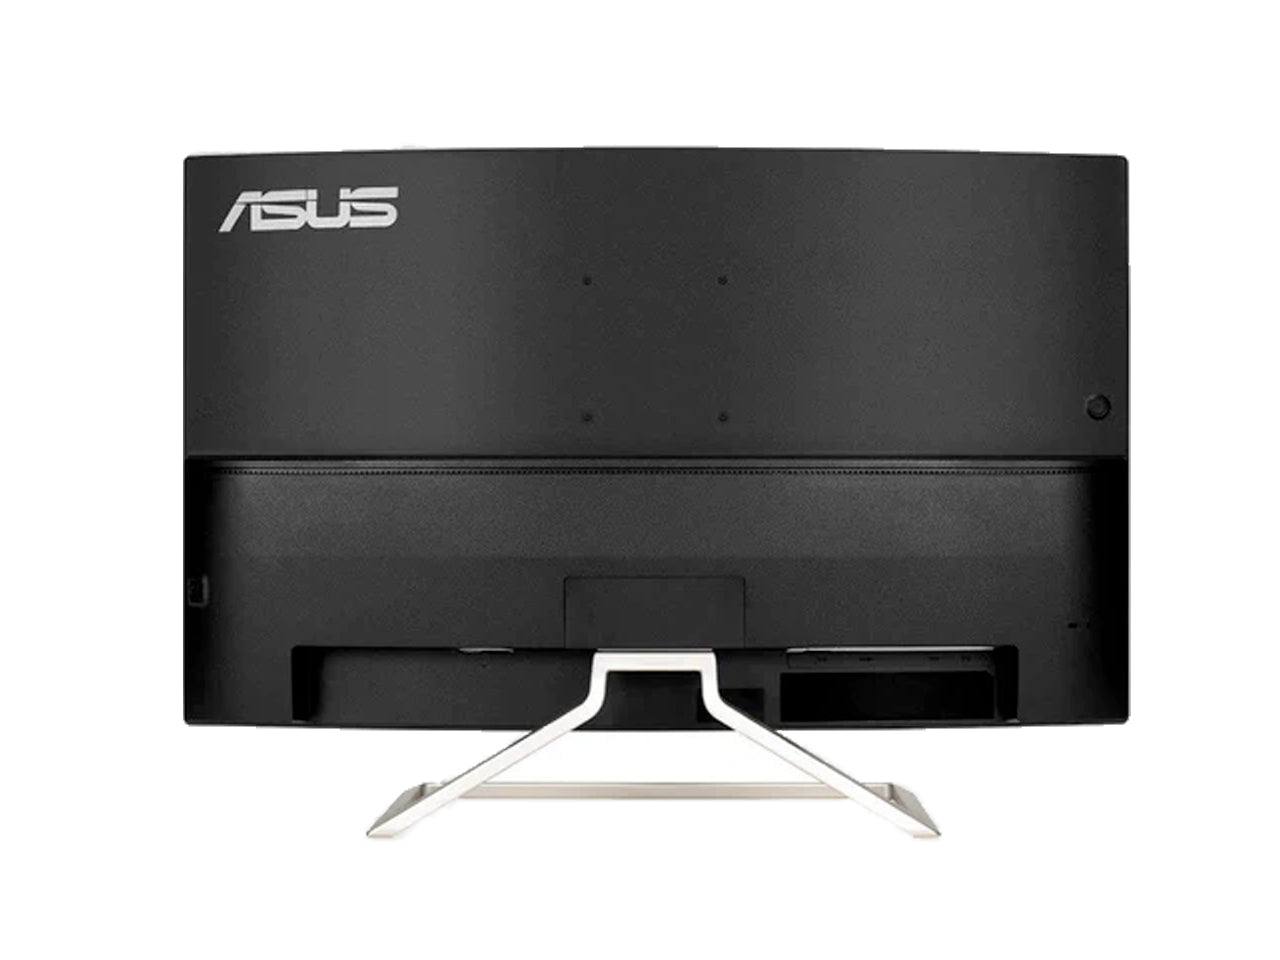 ASUS VA326H 31.5-inch Full HD 144Hz Cureved Gaming Monitor